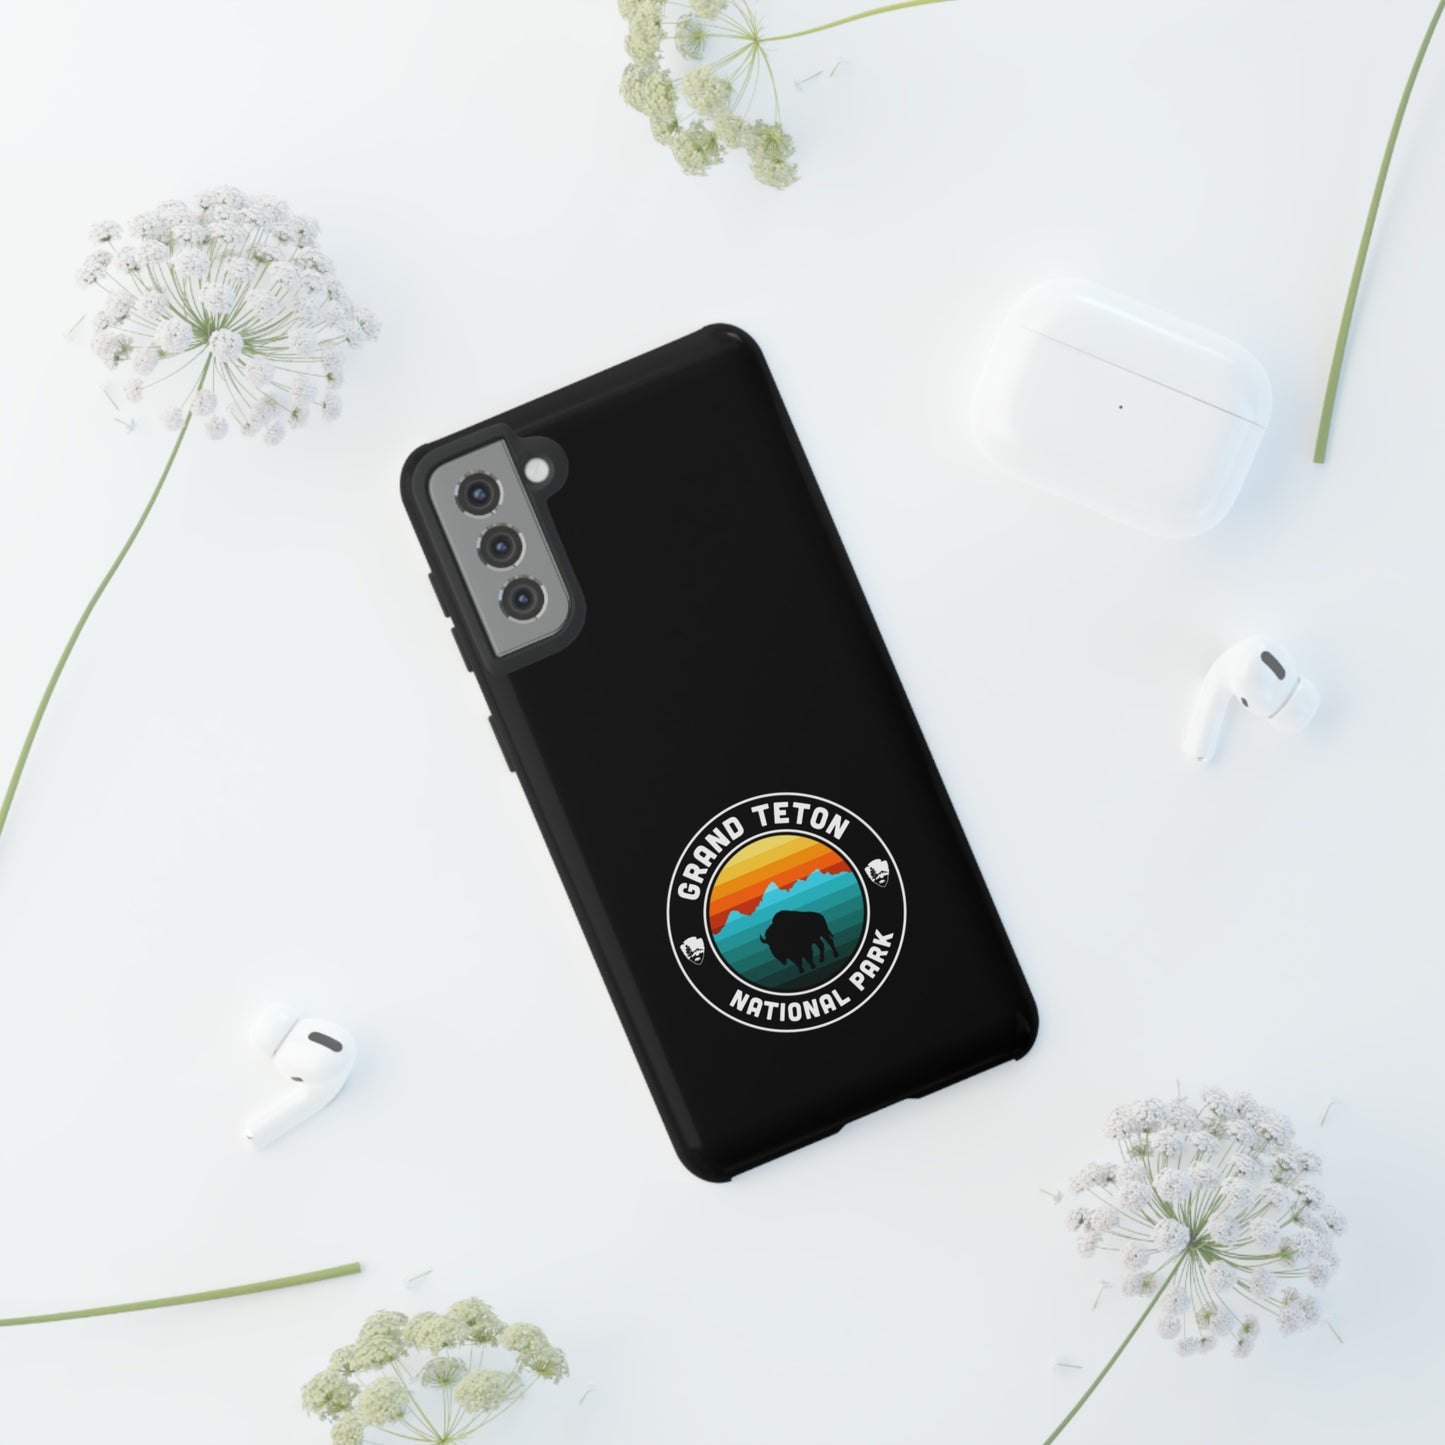 Grand Teton National Park Phone Case - Round Emblem Design